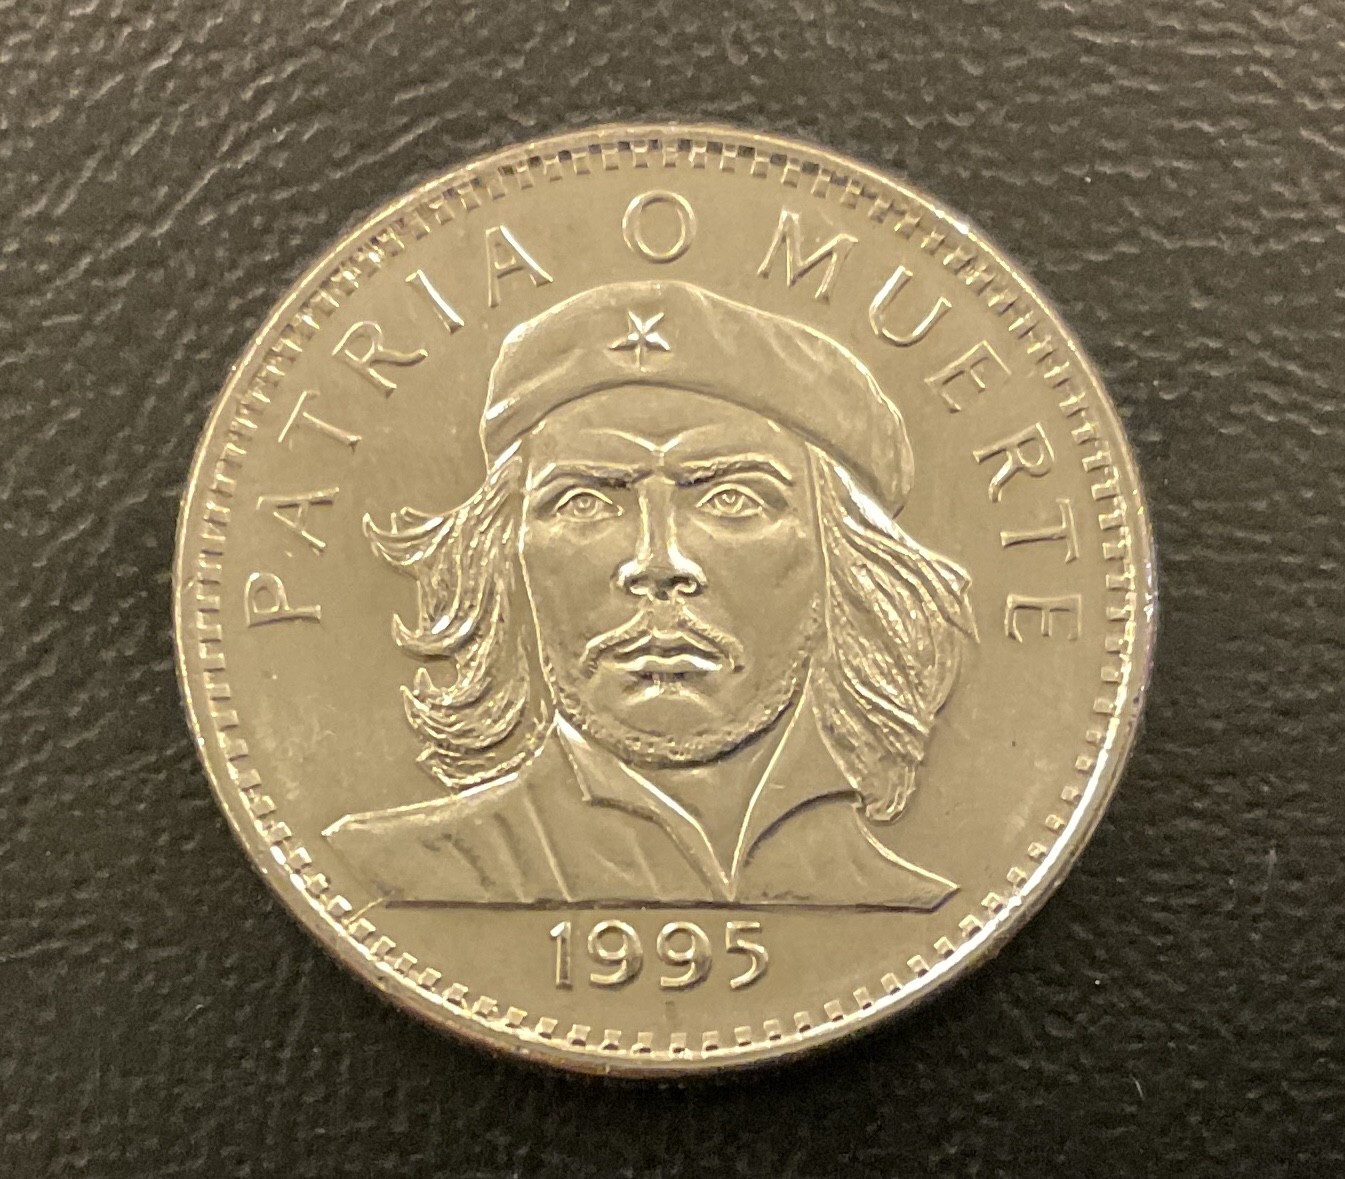 3 pesos